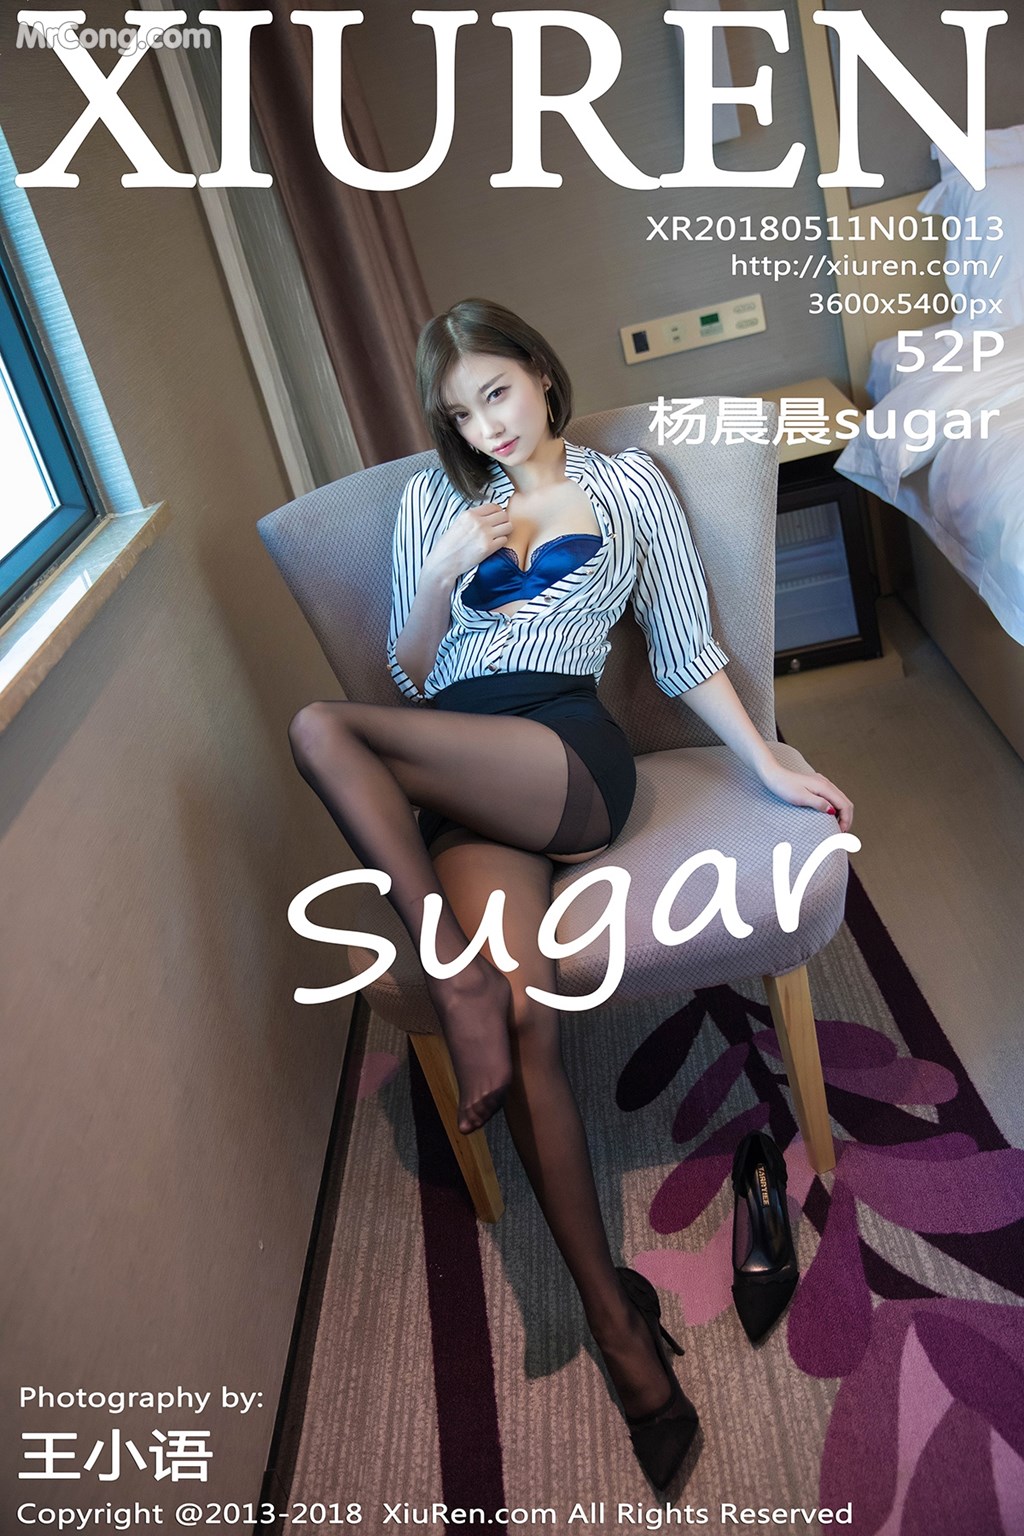 XIUREN No. 1013: Model Yang Chen Chen (杨晨晨 sugar) (53 photos)